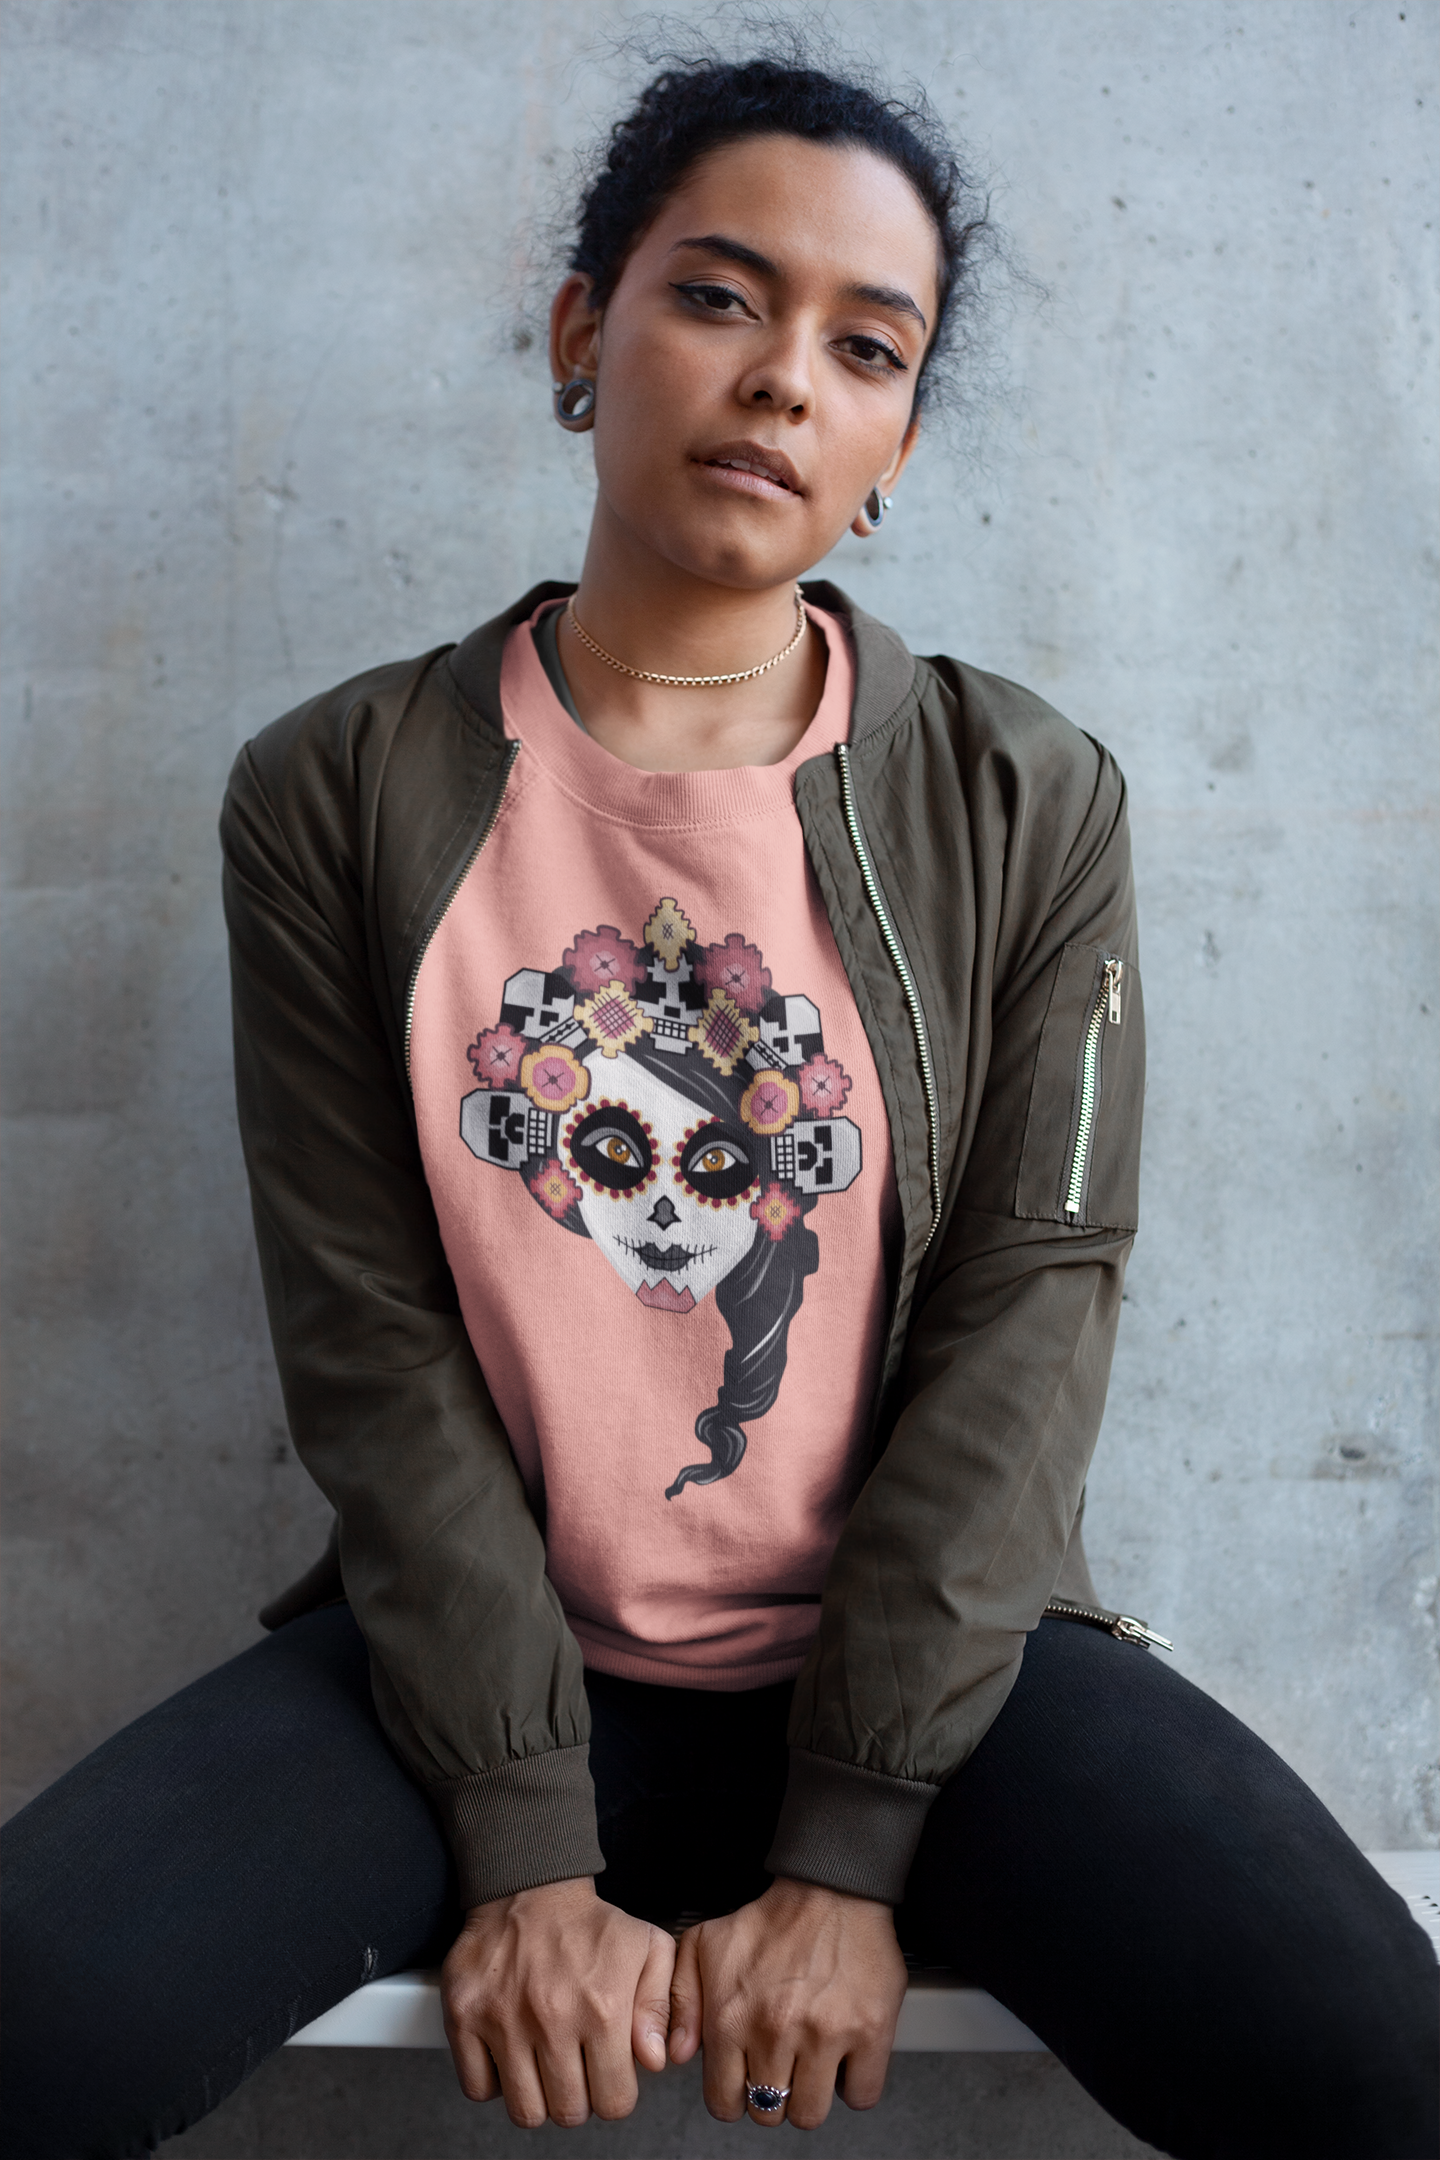 Mexican Catrina Sweatshirt